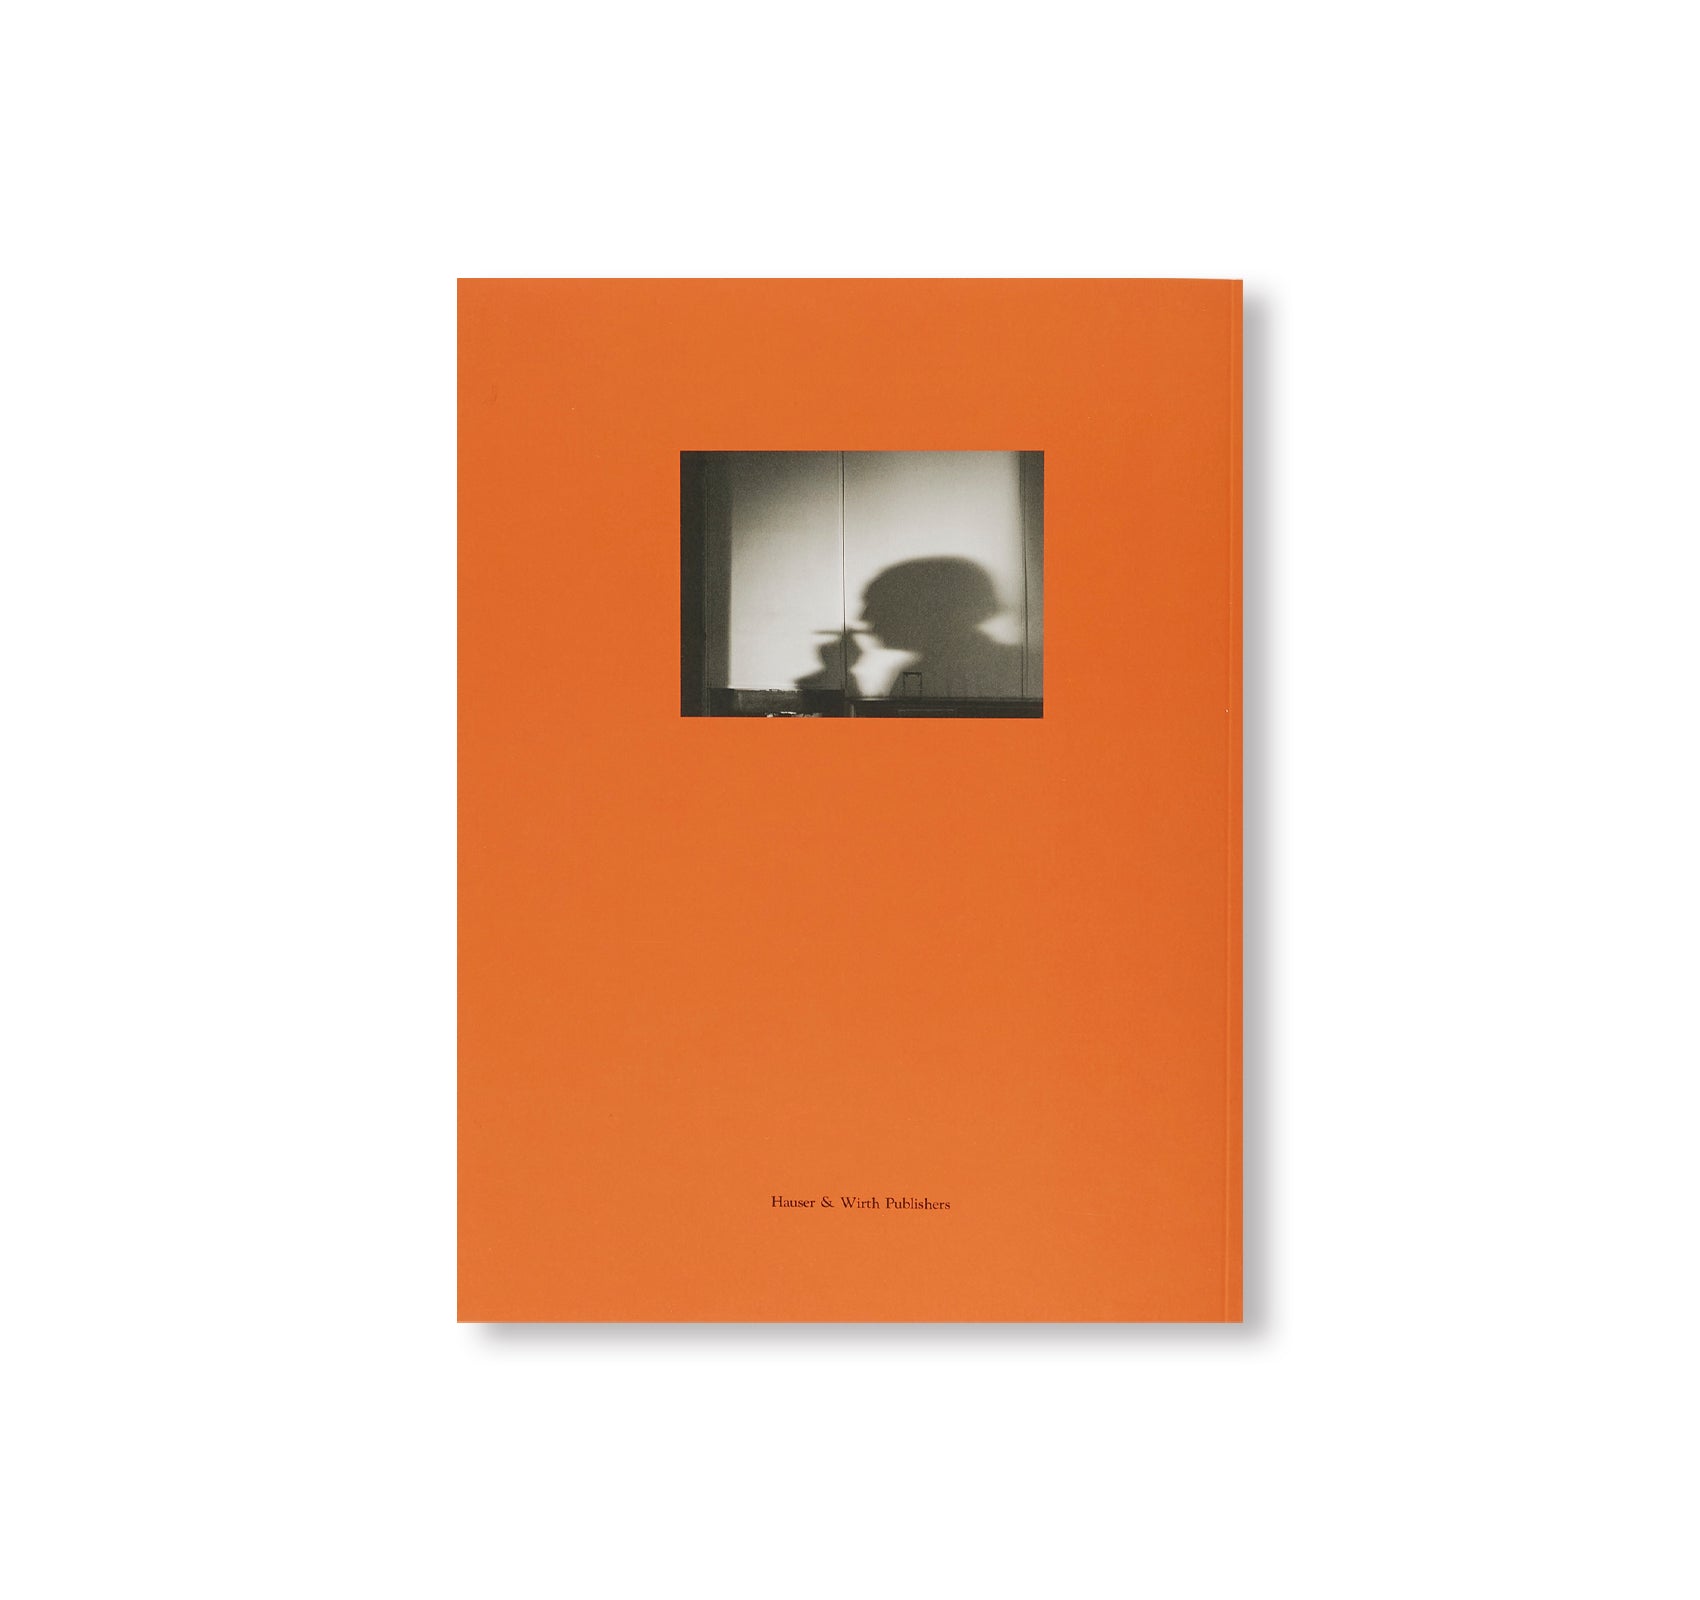 MARCEL DUCHAMP: FACSIMILE OF THE 1959 by Marcel Duchamp, Robert Lebel